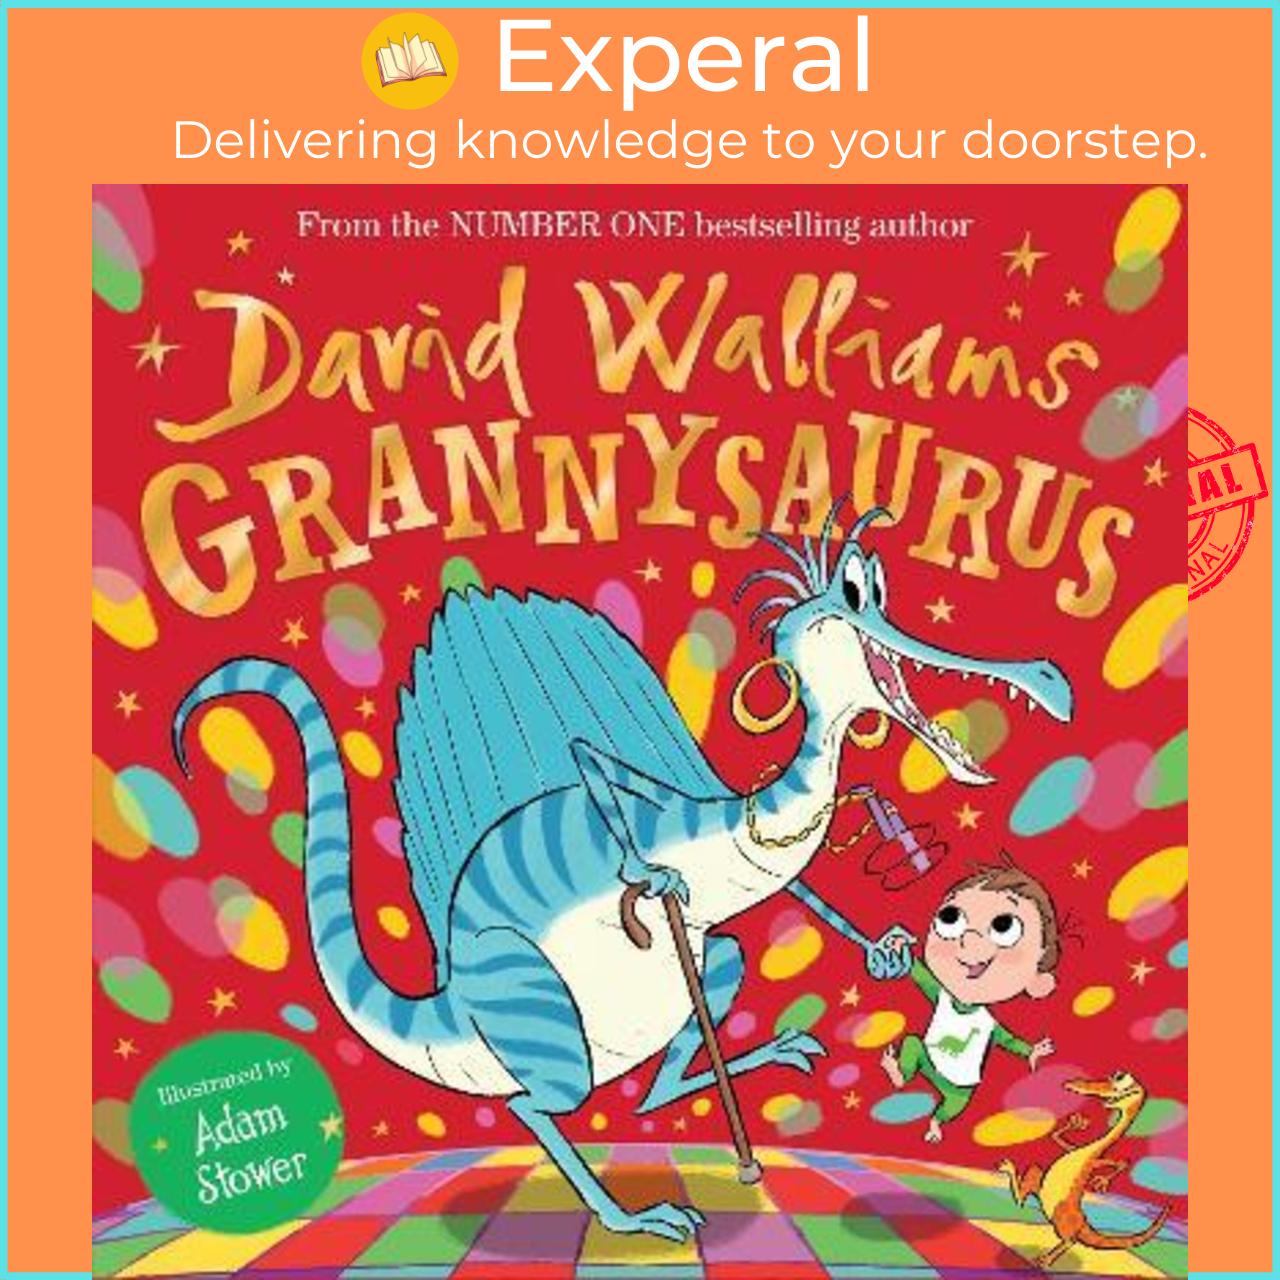 Sách - Grannysaurus by David Walliams (UK edition, hardcover)